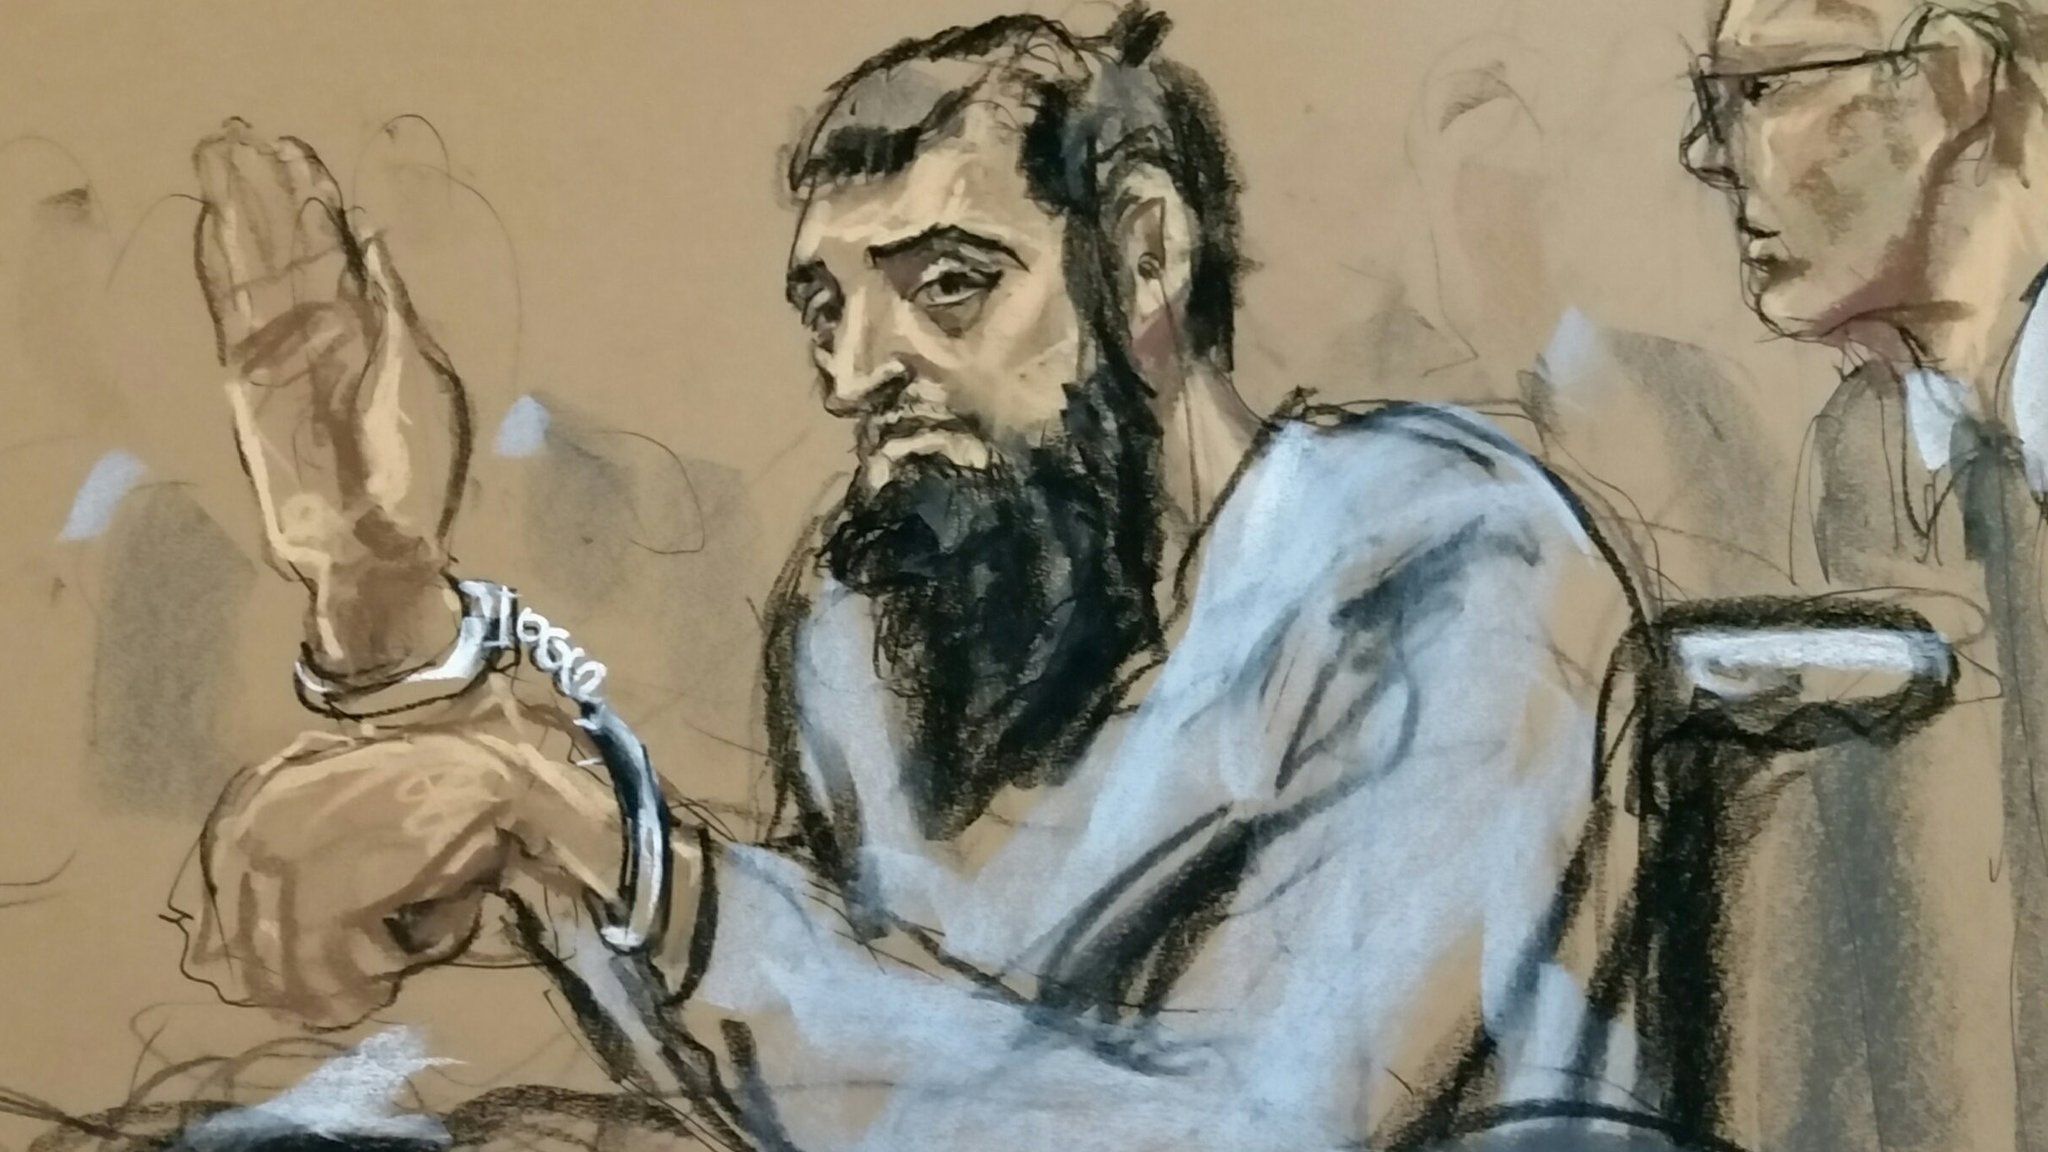 Court sketch of suspect Sayfullo Saipov - 1 November